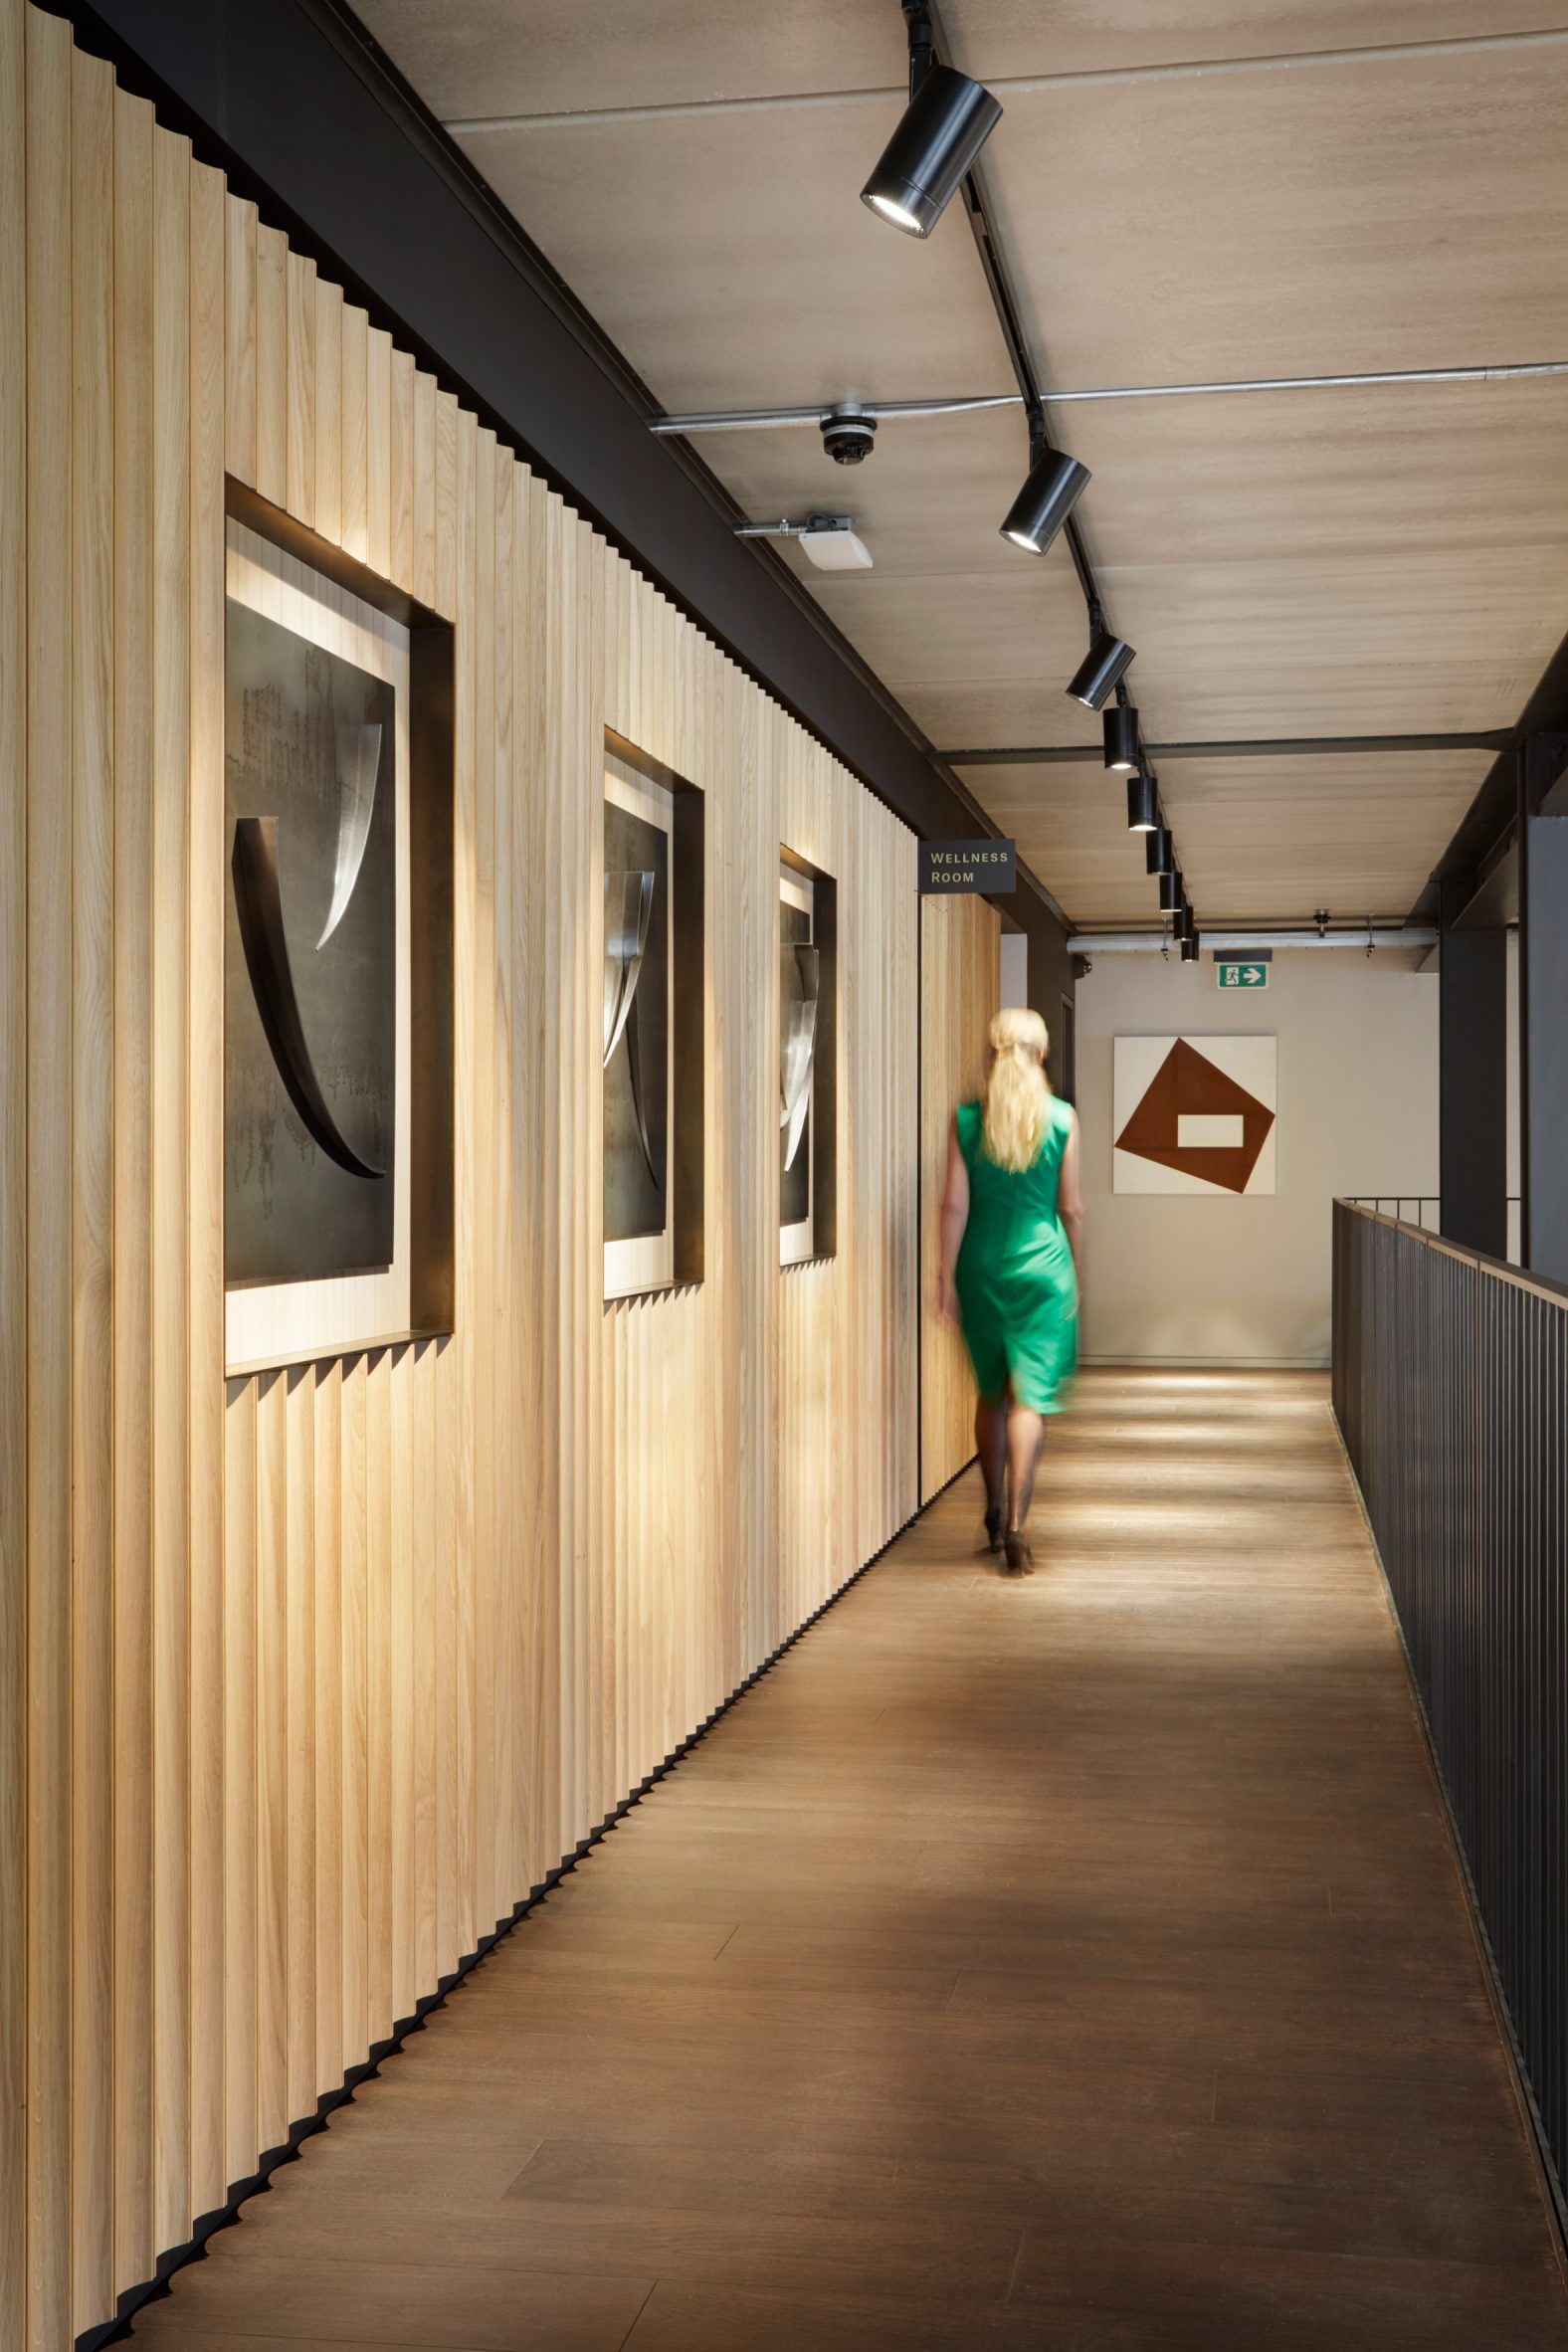 Walkway in DL/78 workspace designed by MSMR Architects for Derwent London's 80 Charlotte Street